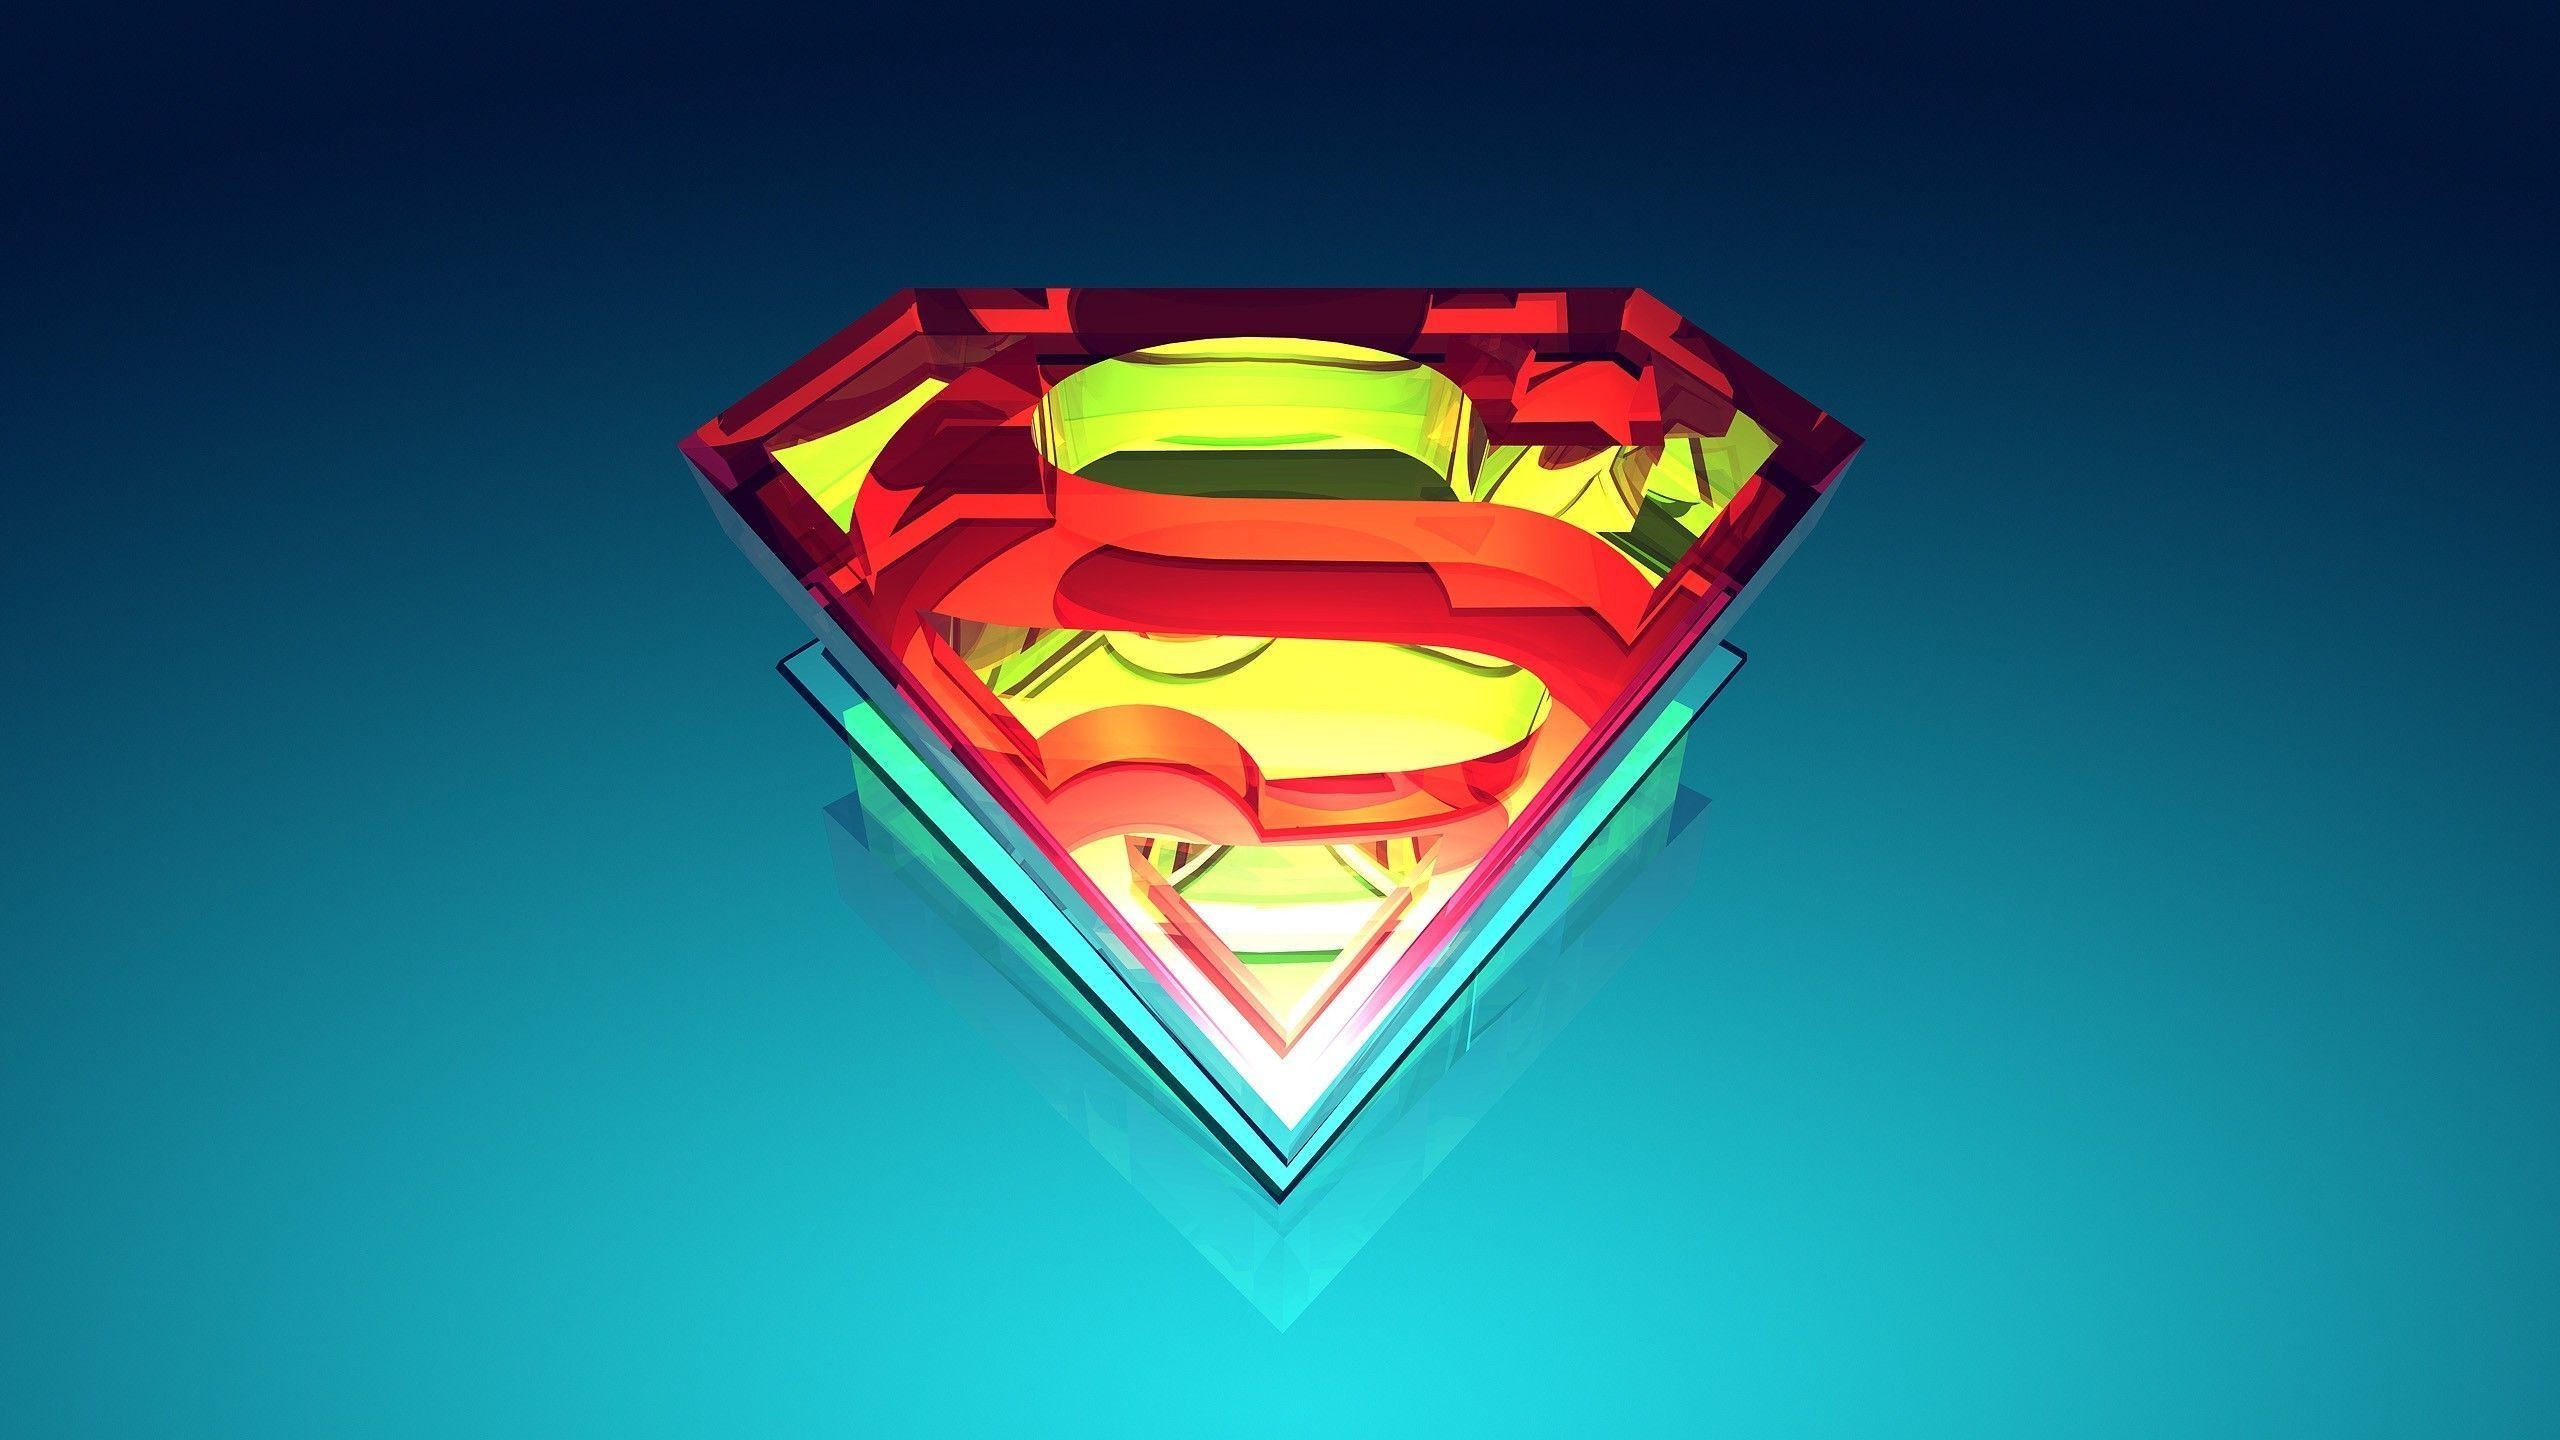 2560x1440  Superman Logo Wallpaper Picture ~ Sdeerwallpaper 1440Ã—900  Superman Logo Wallpaper (53 Wallpapers)